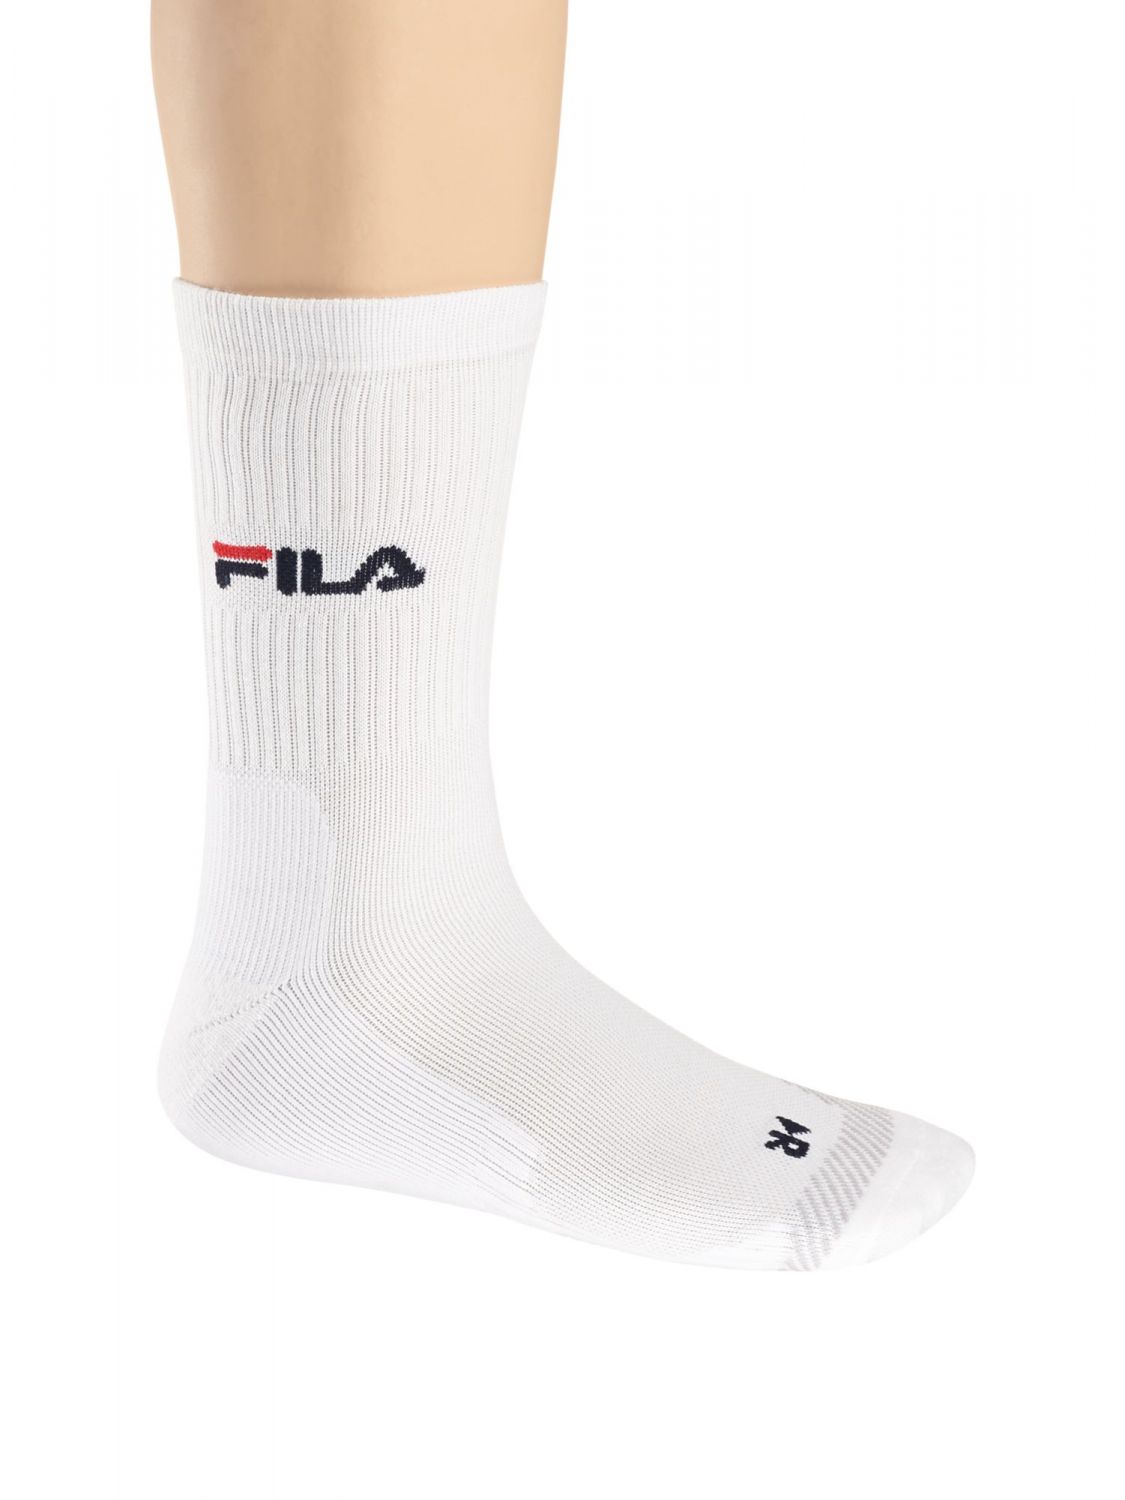 Fila - Tennis socks - 00014201413109 - white | FILA GERMANY